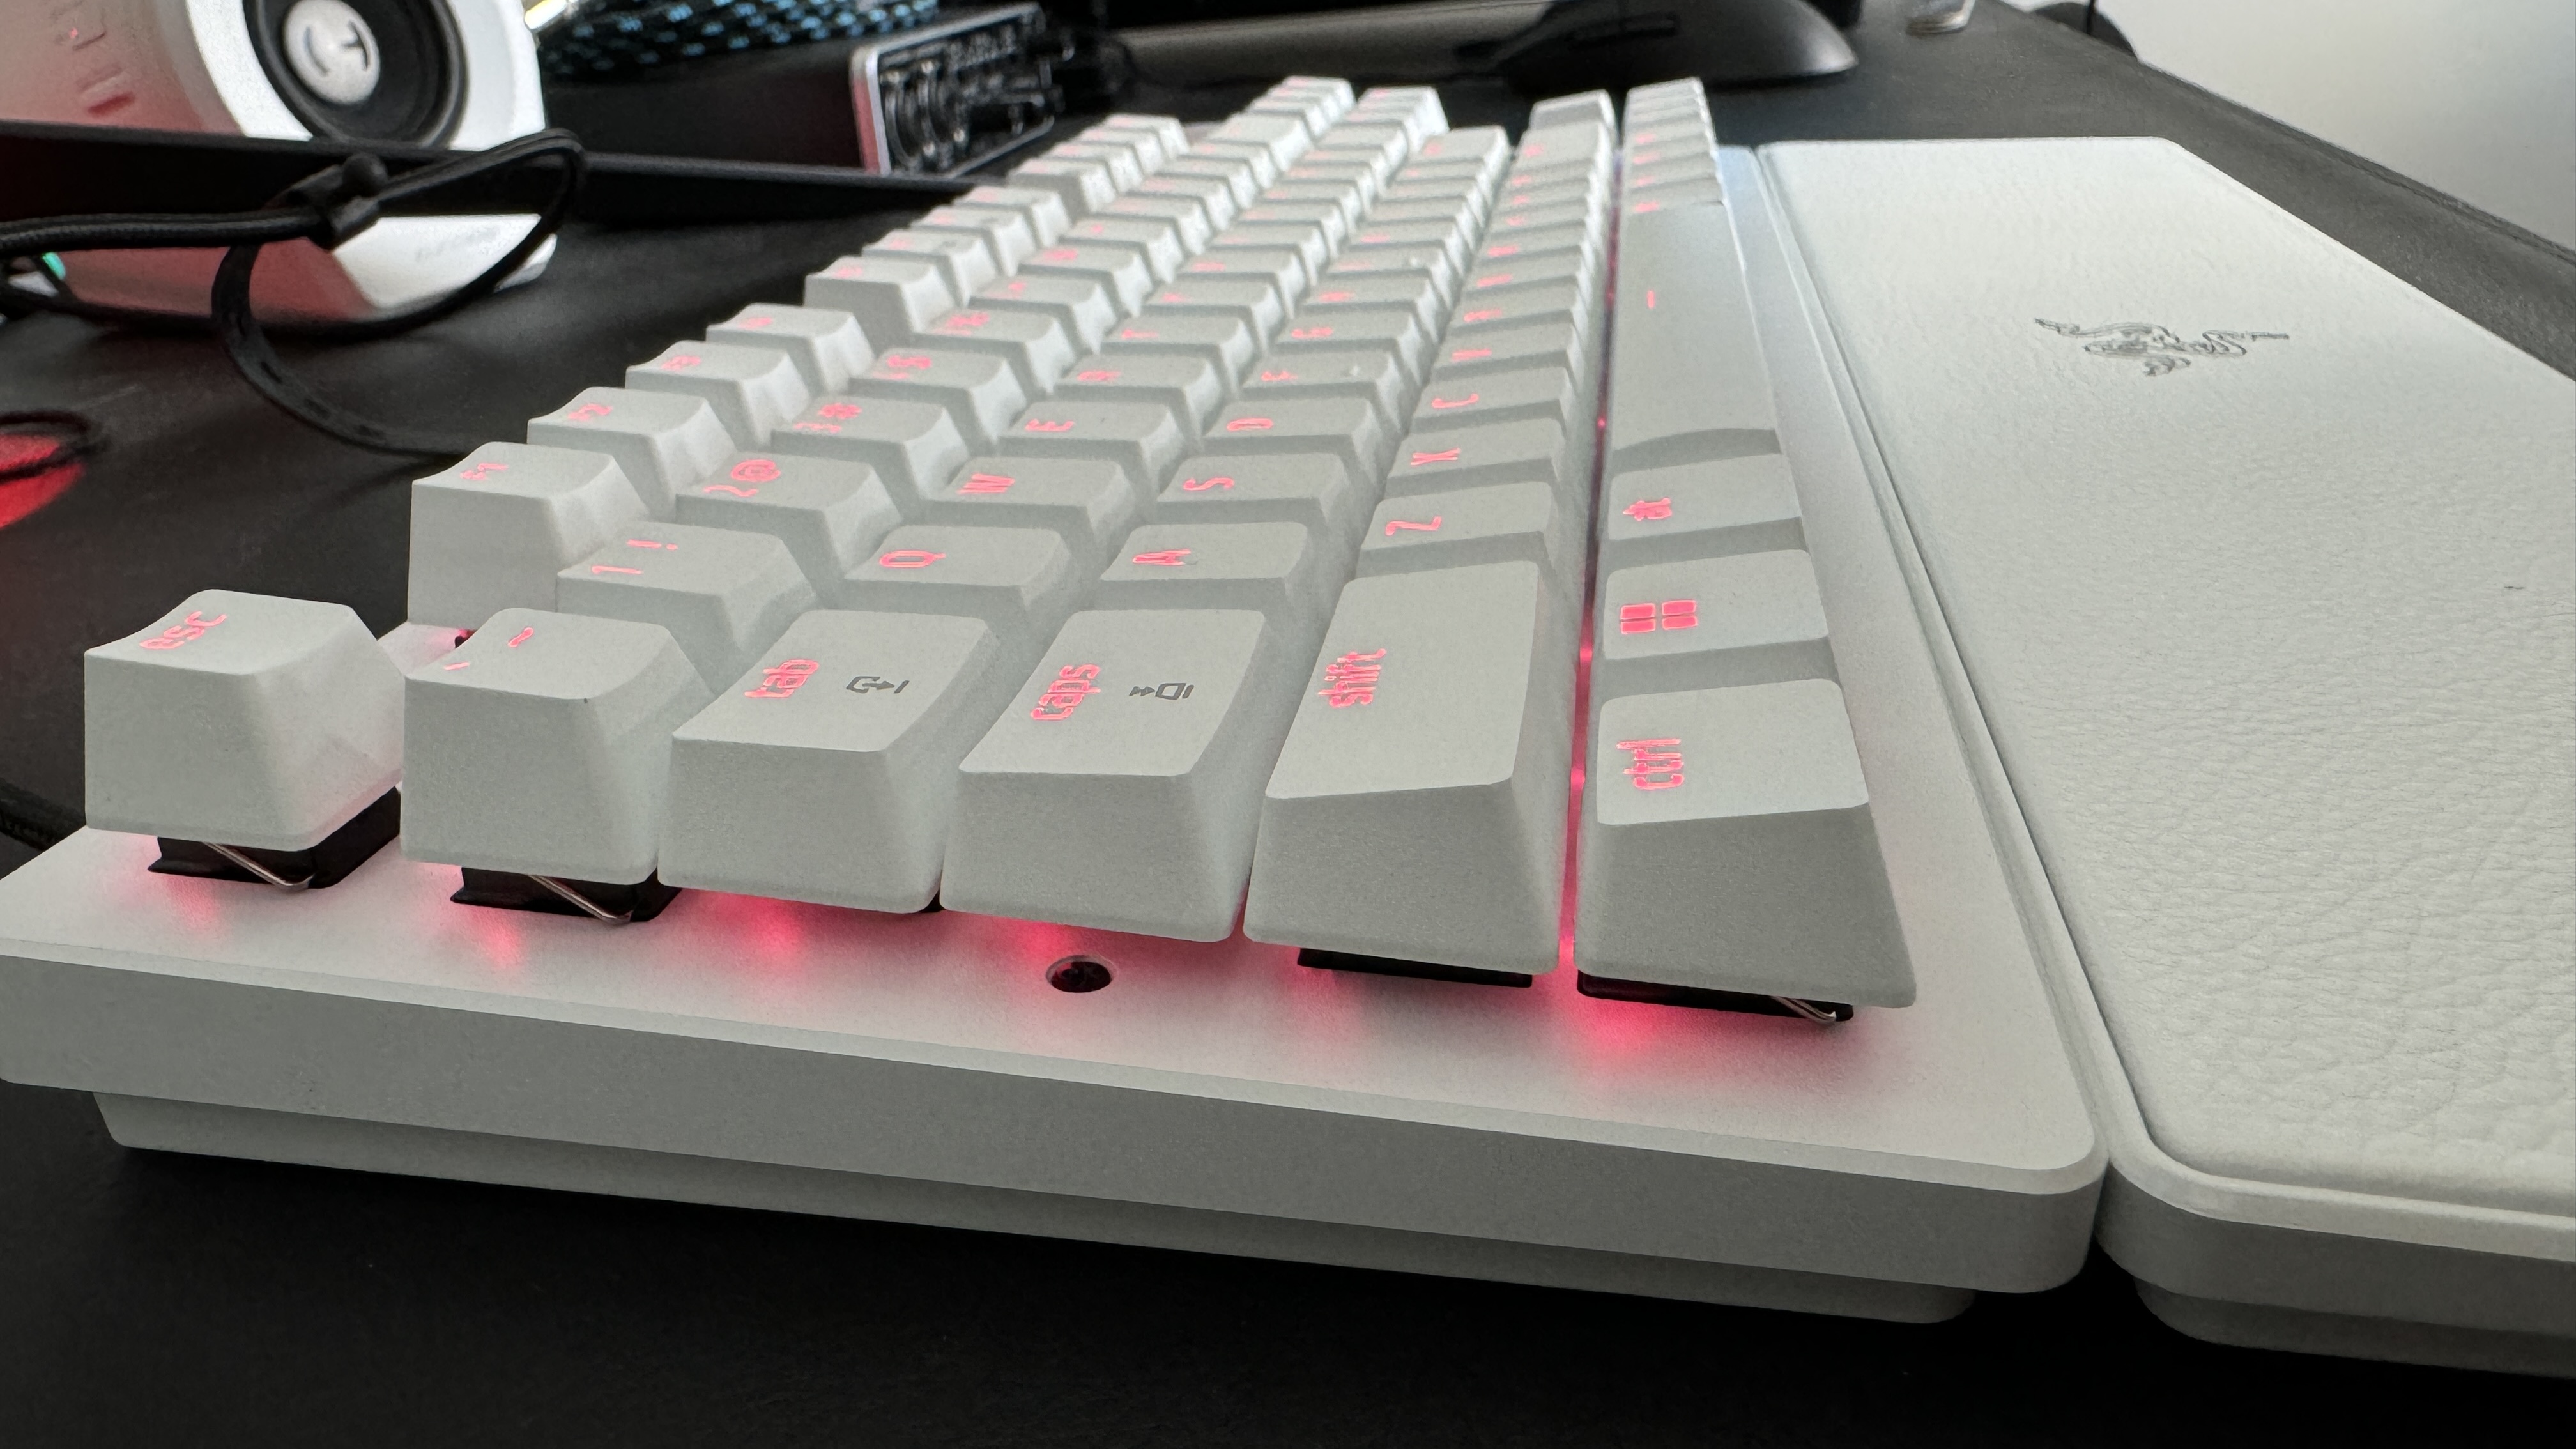 Razer's latest Huntsman V3 Pro TKL gaming keyboard on a desk.